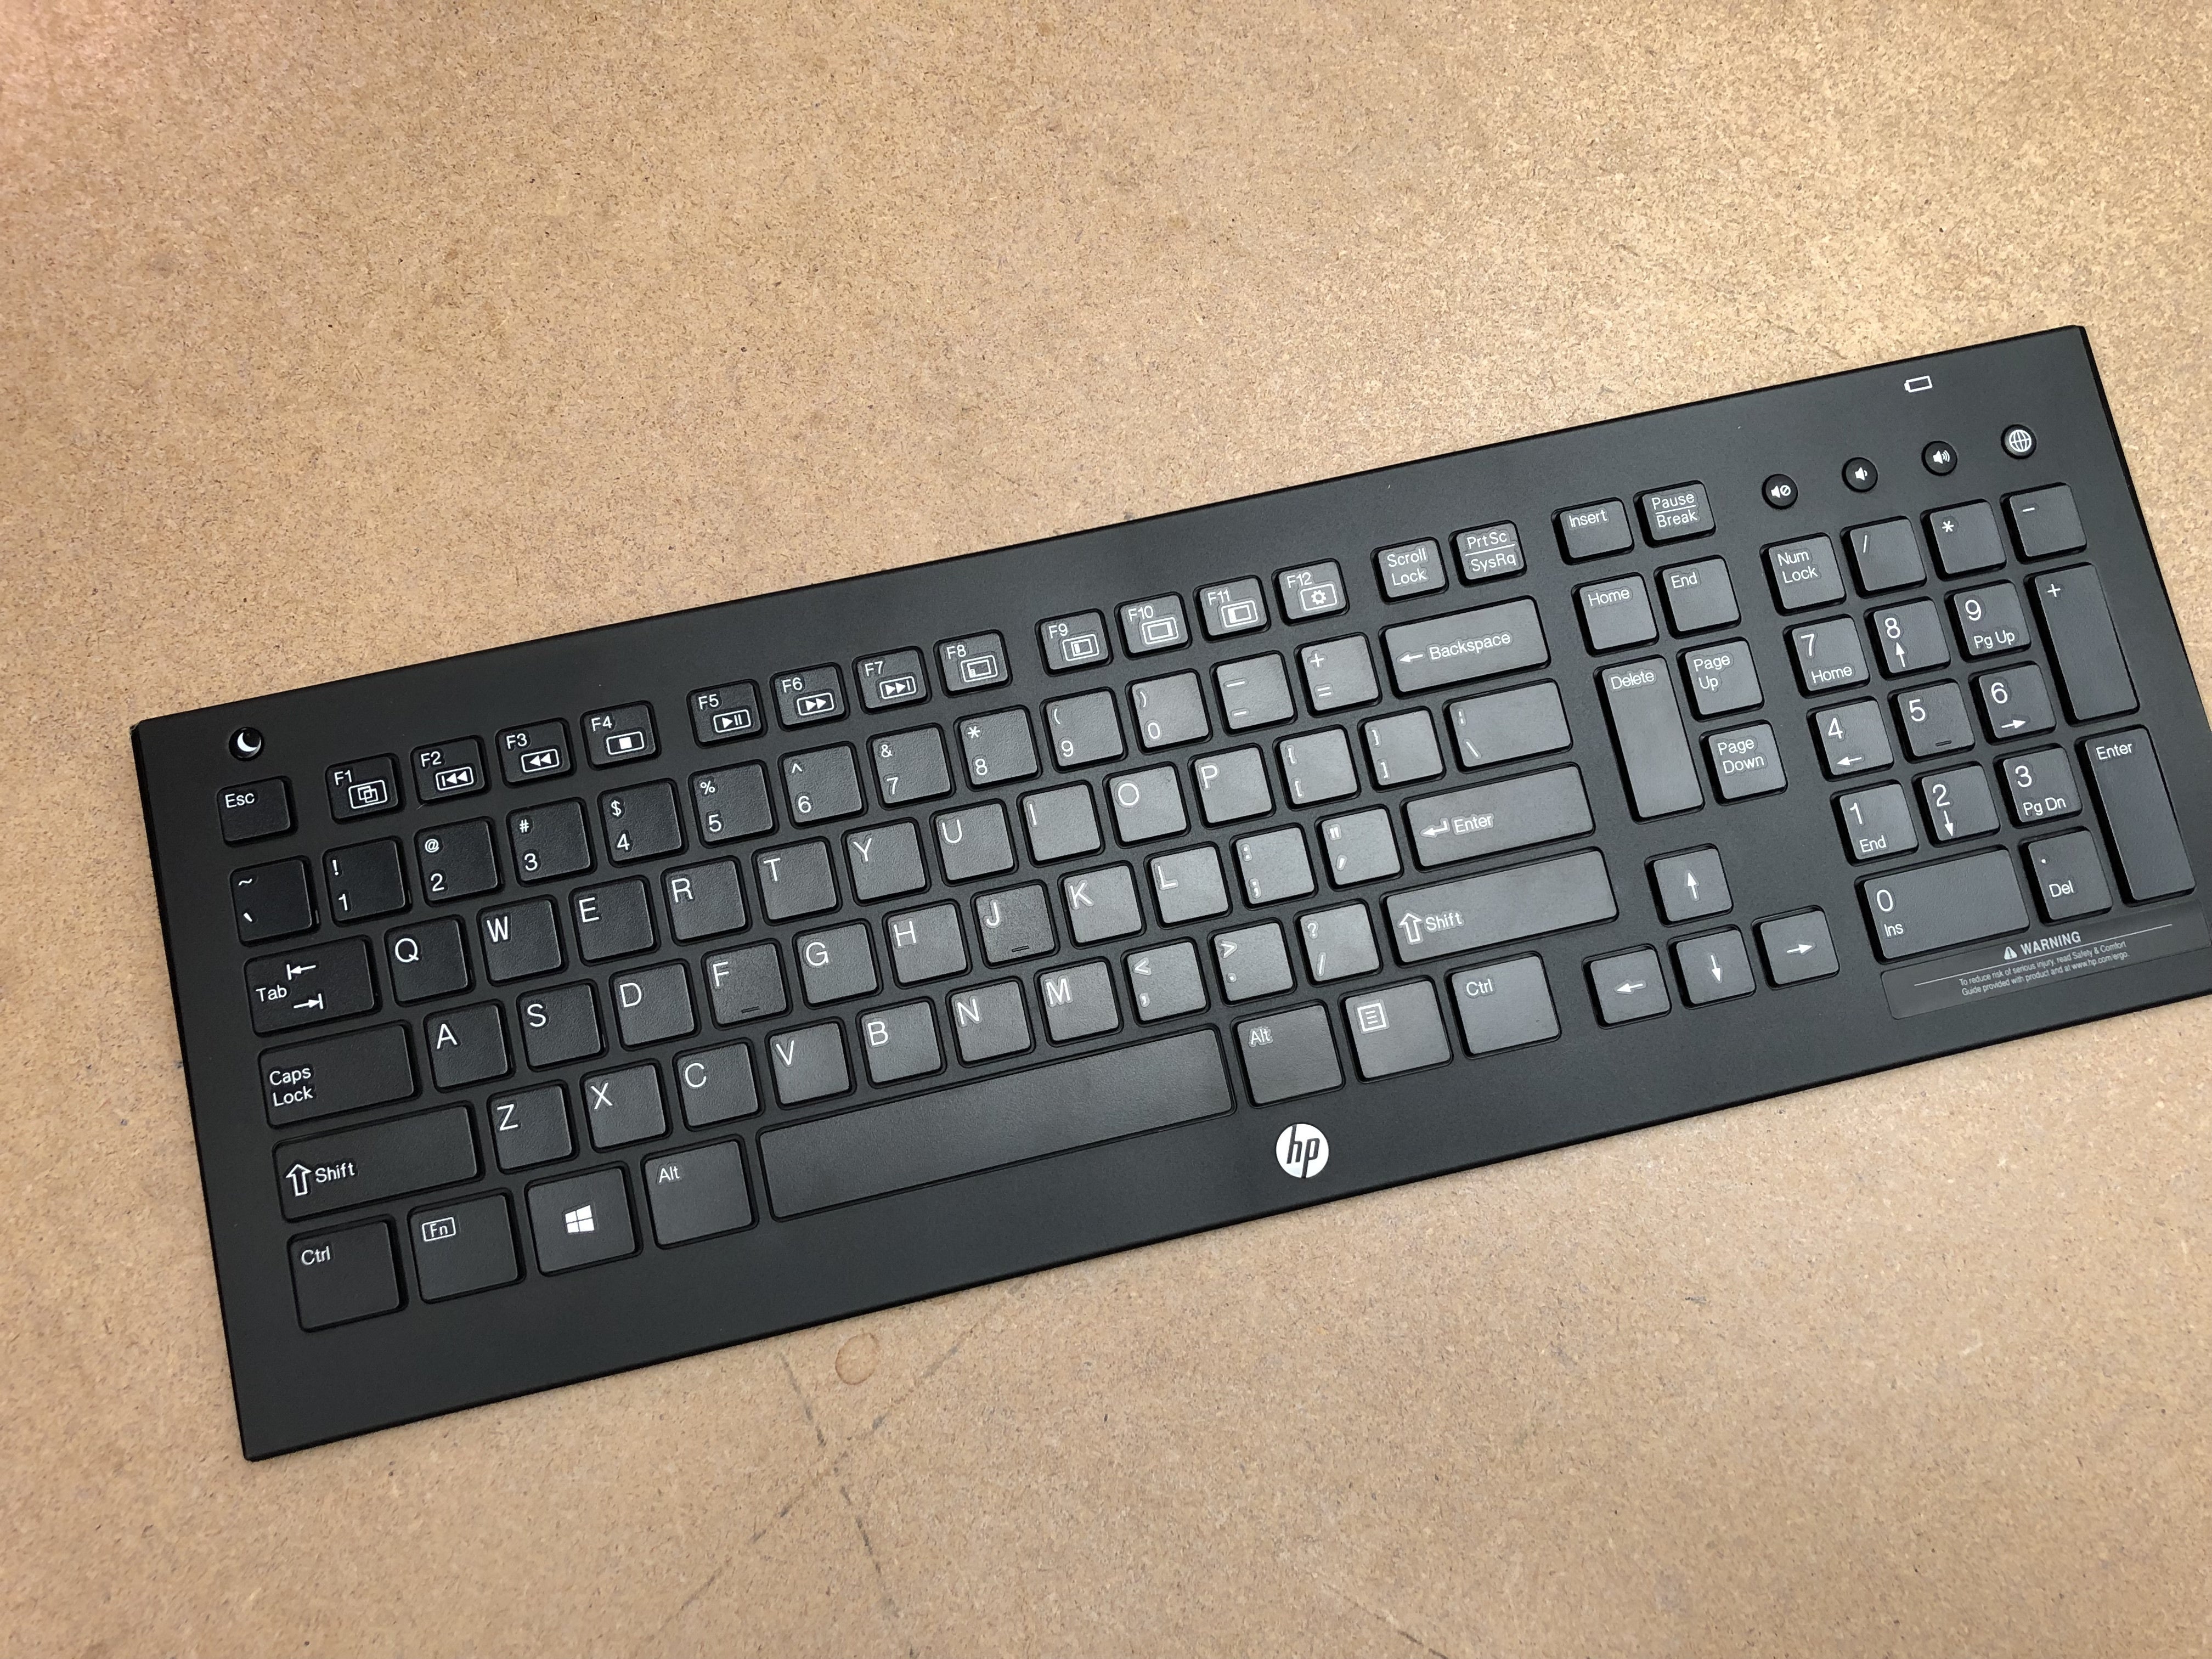 hp keyboard brightness control